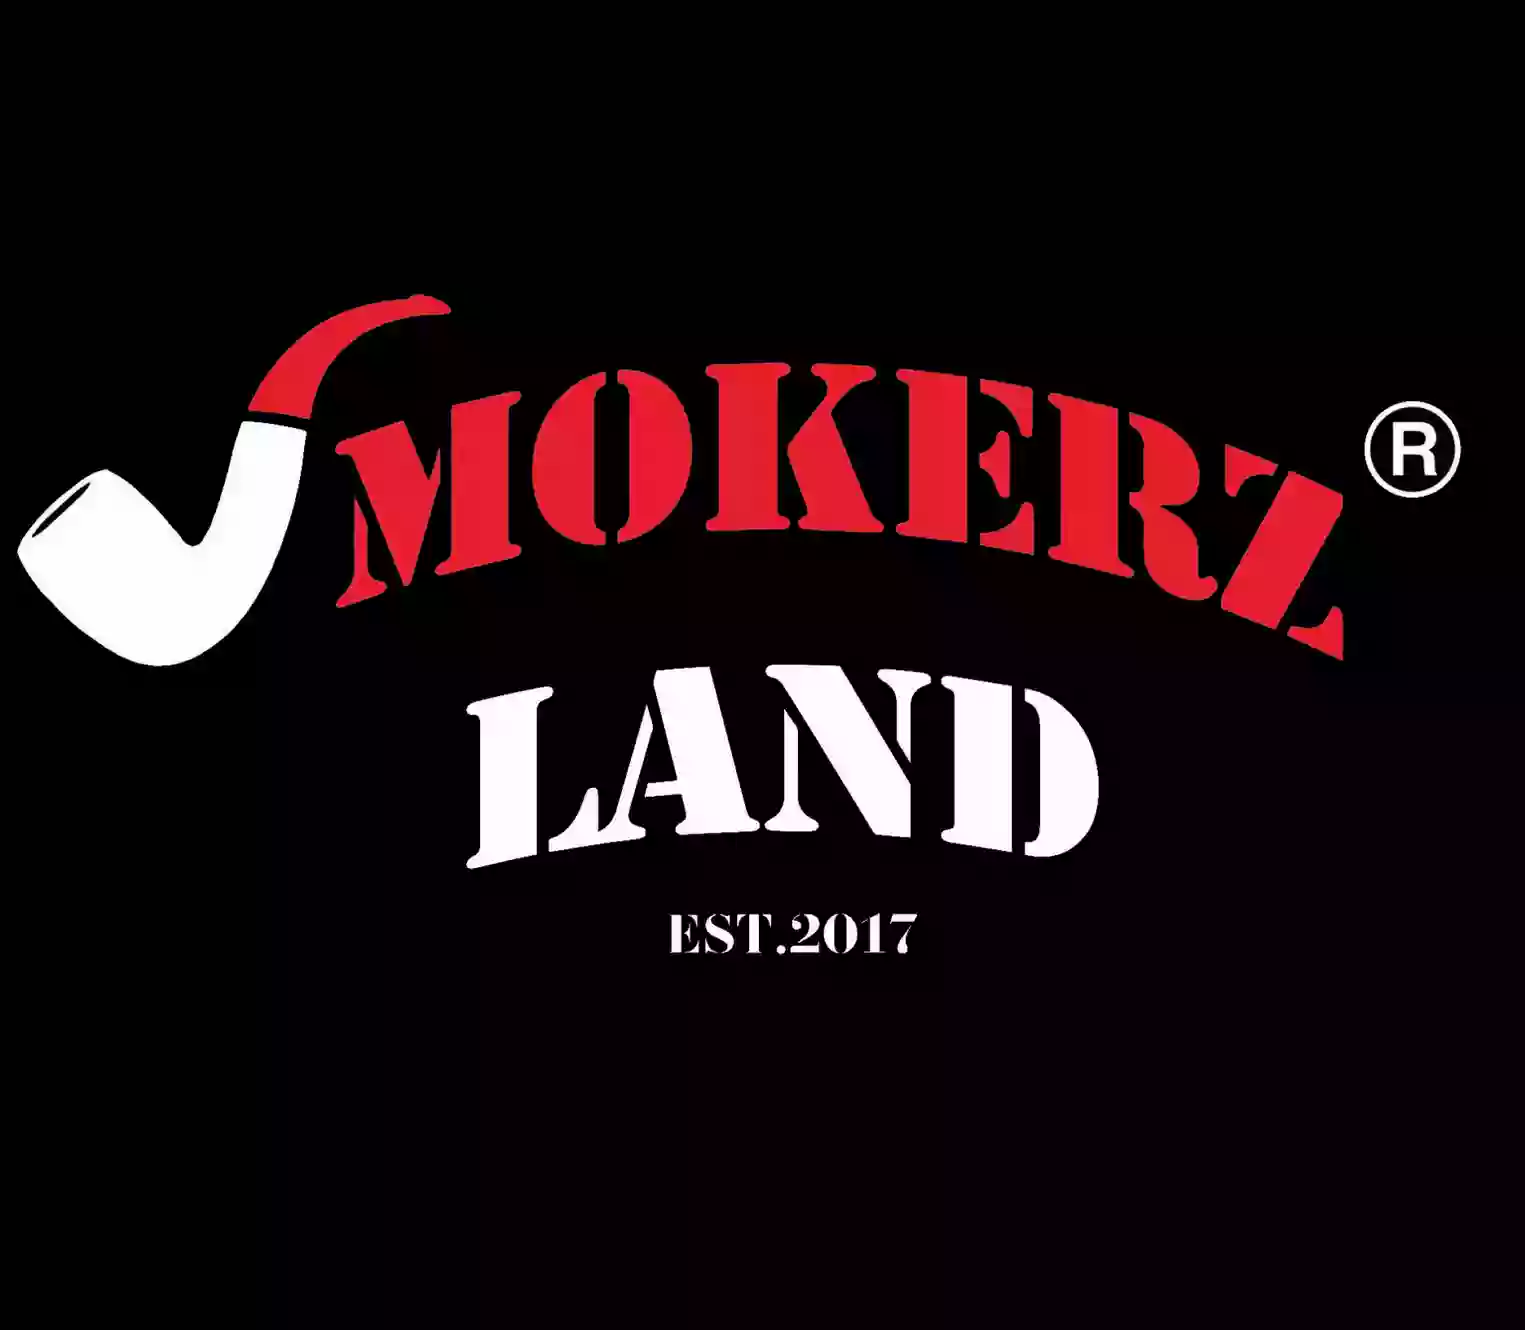 Smokerz Land Smoke Shop